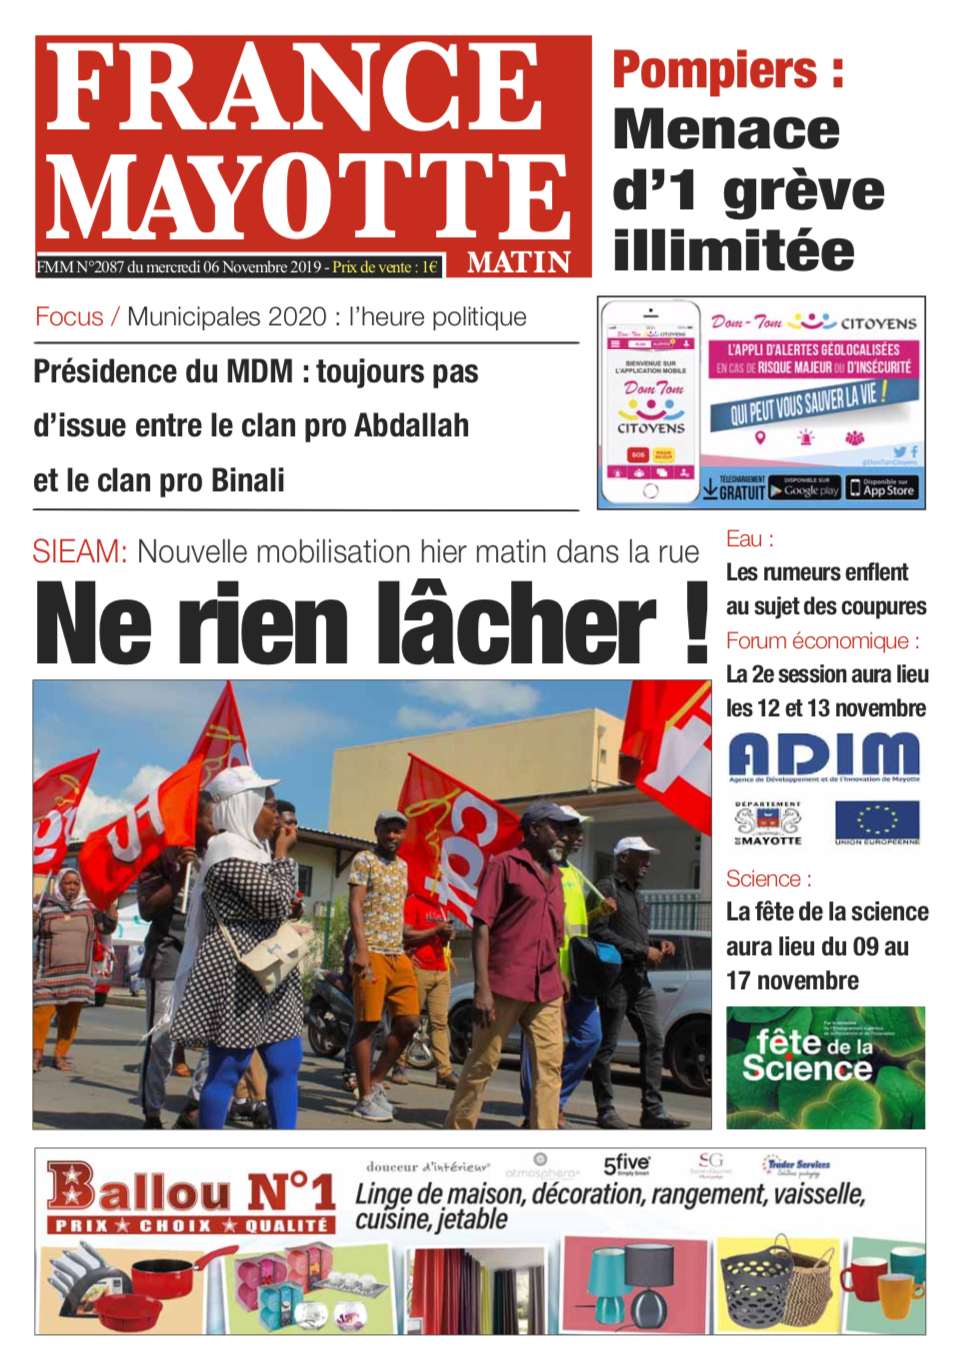 France Mayotte Mercredi 6 novembre 2019